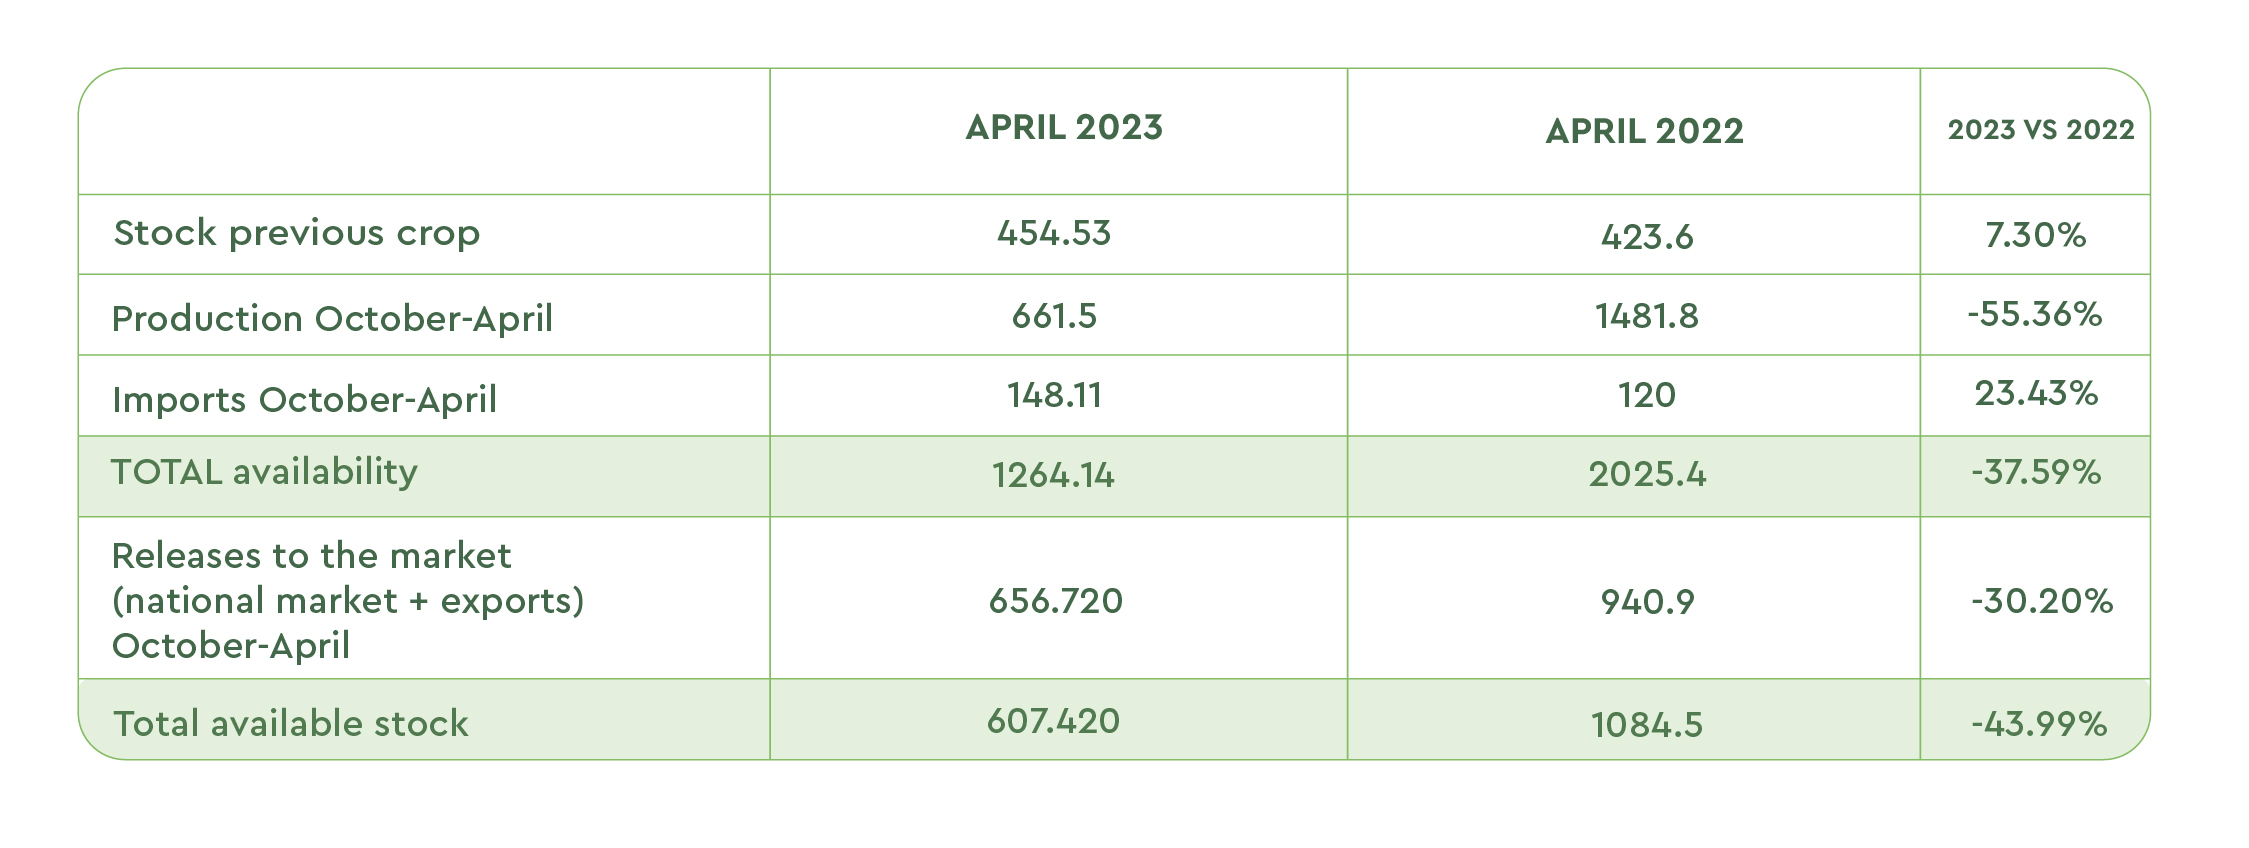 Olive oil production 2022 vs 2023